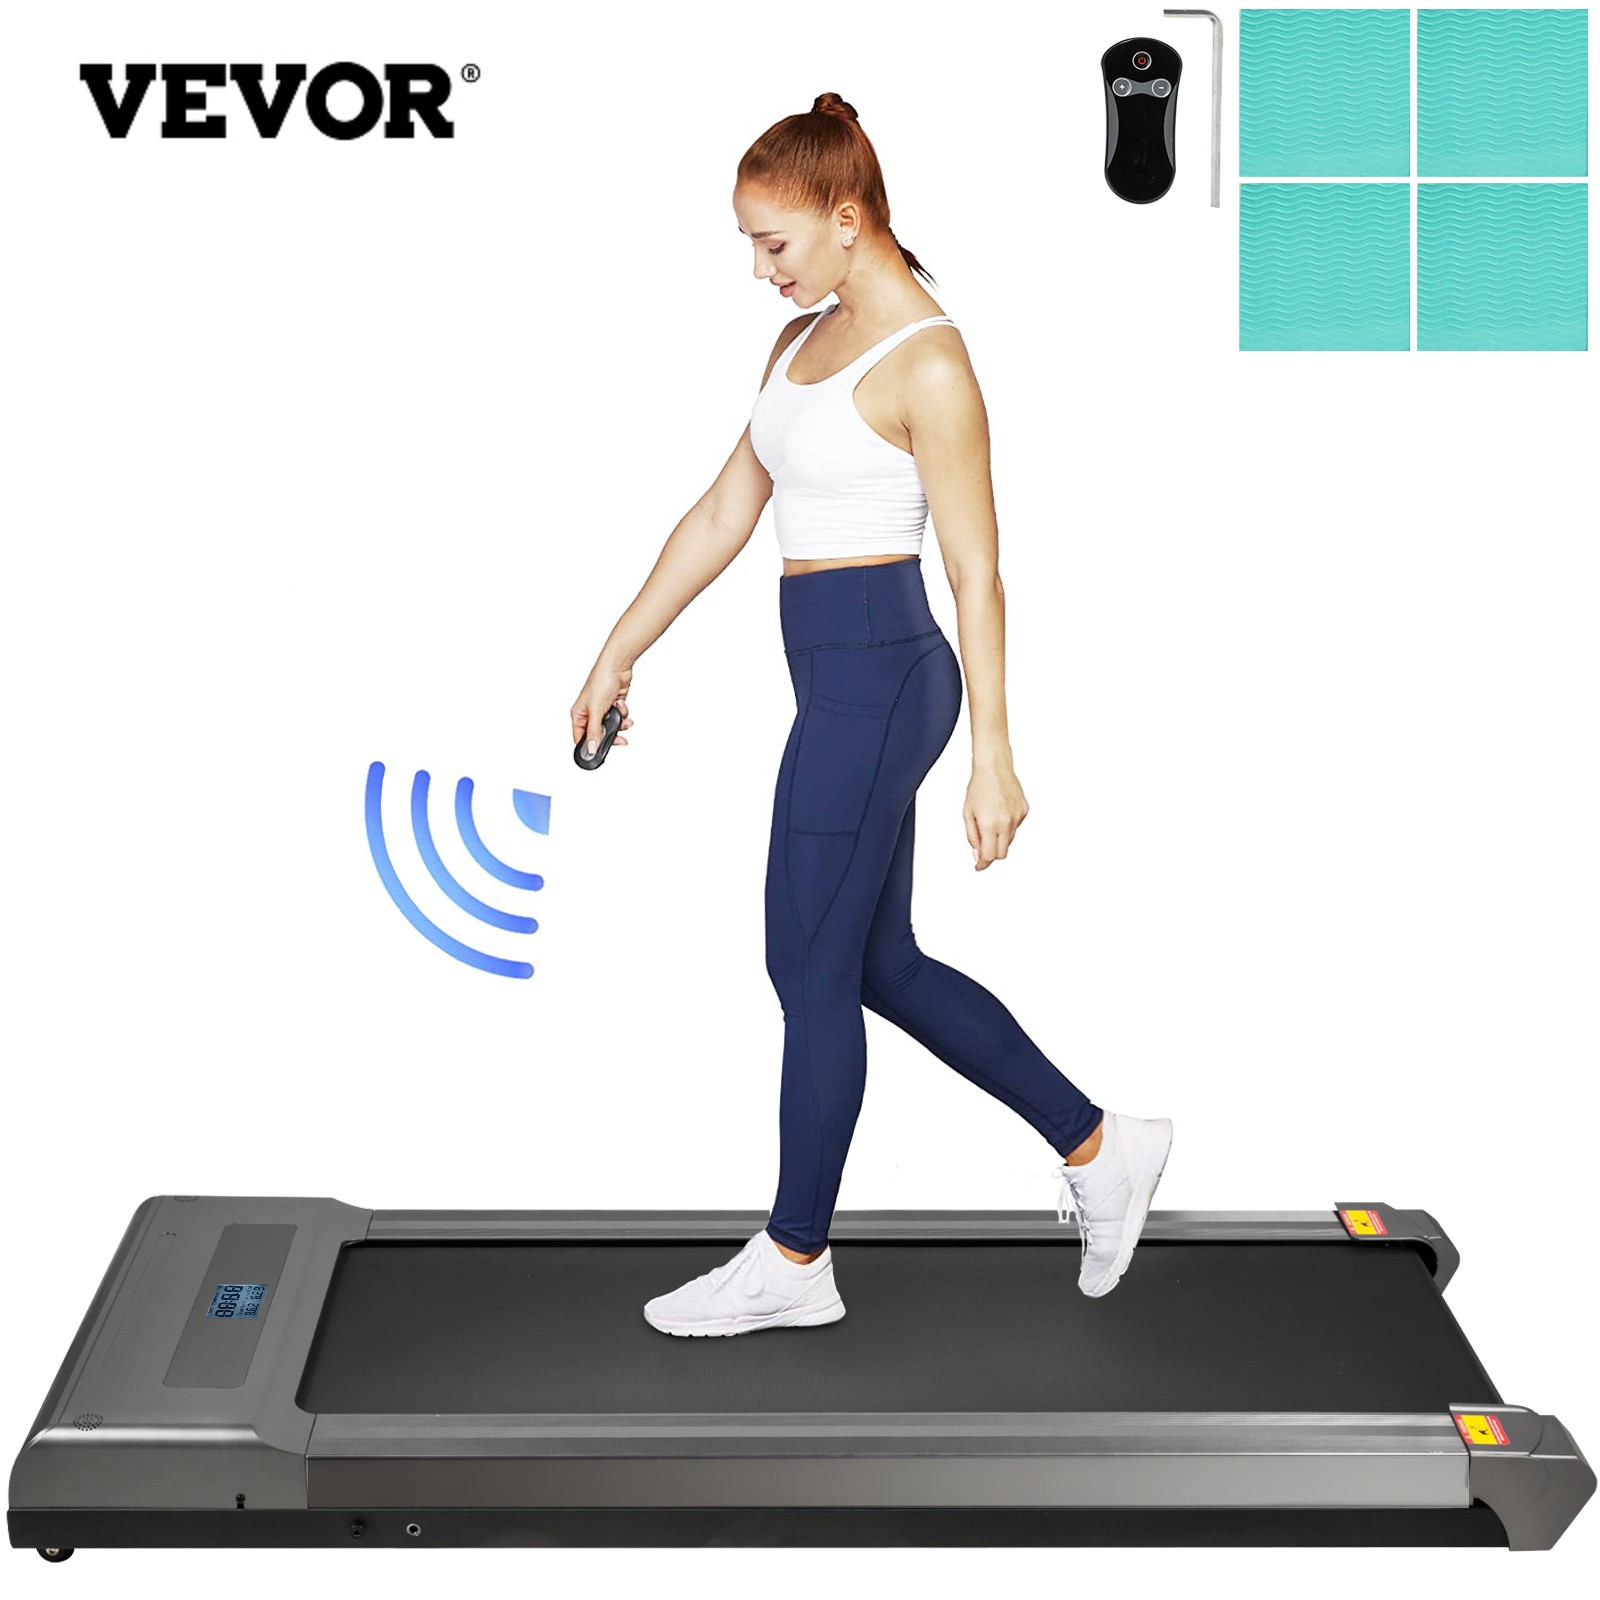 Electric Treadmill 2in1 Under Desk Treadmills Fitness Training w/ Remote Control от Vevor Many GEOs